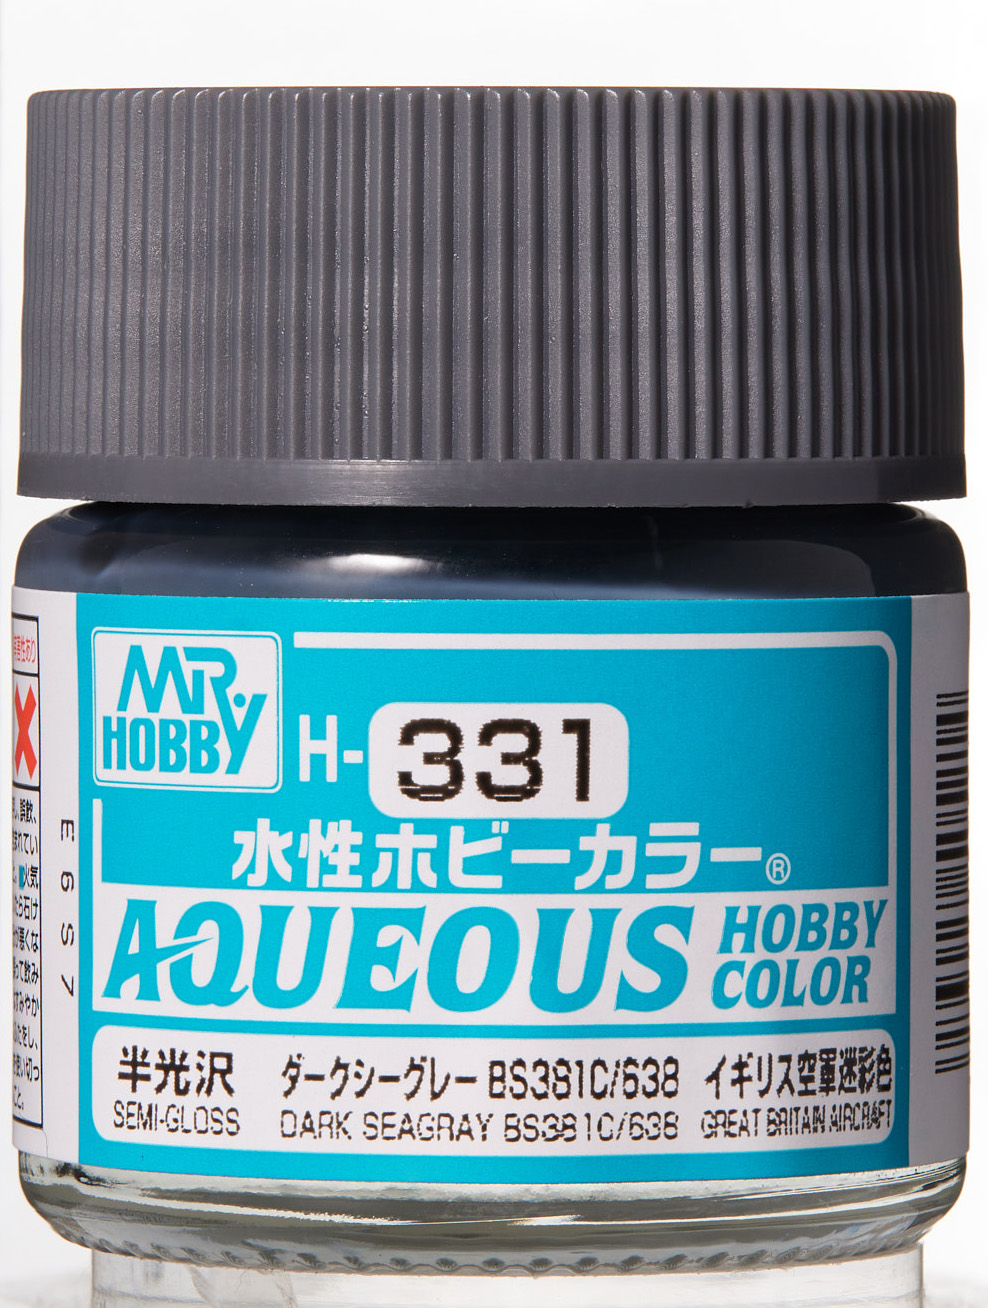 Mr. Aqueous Hobby Color - Dark Seagrey BS381C/638 - H331 - Seegrau Dunkel BS381C/638